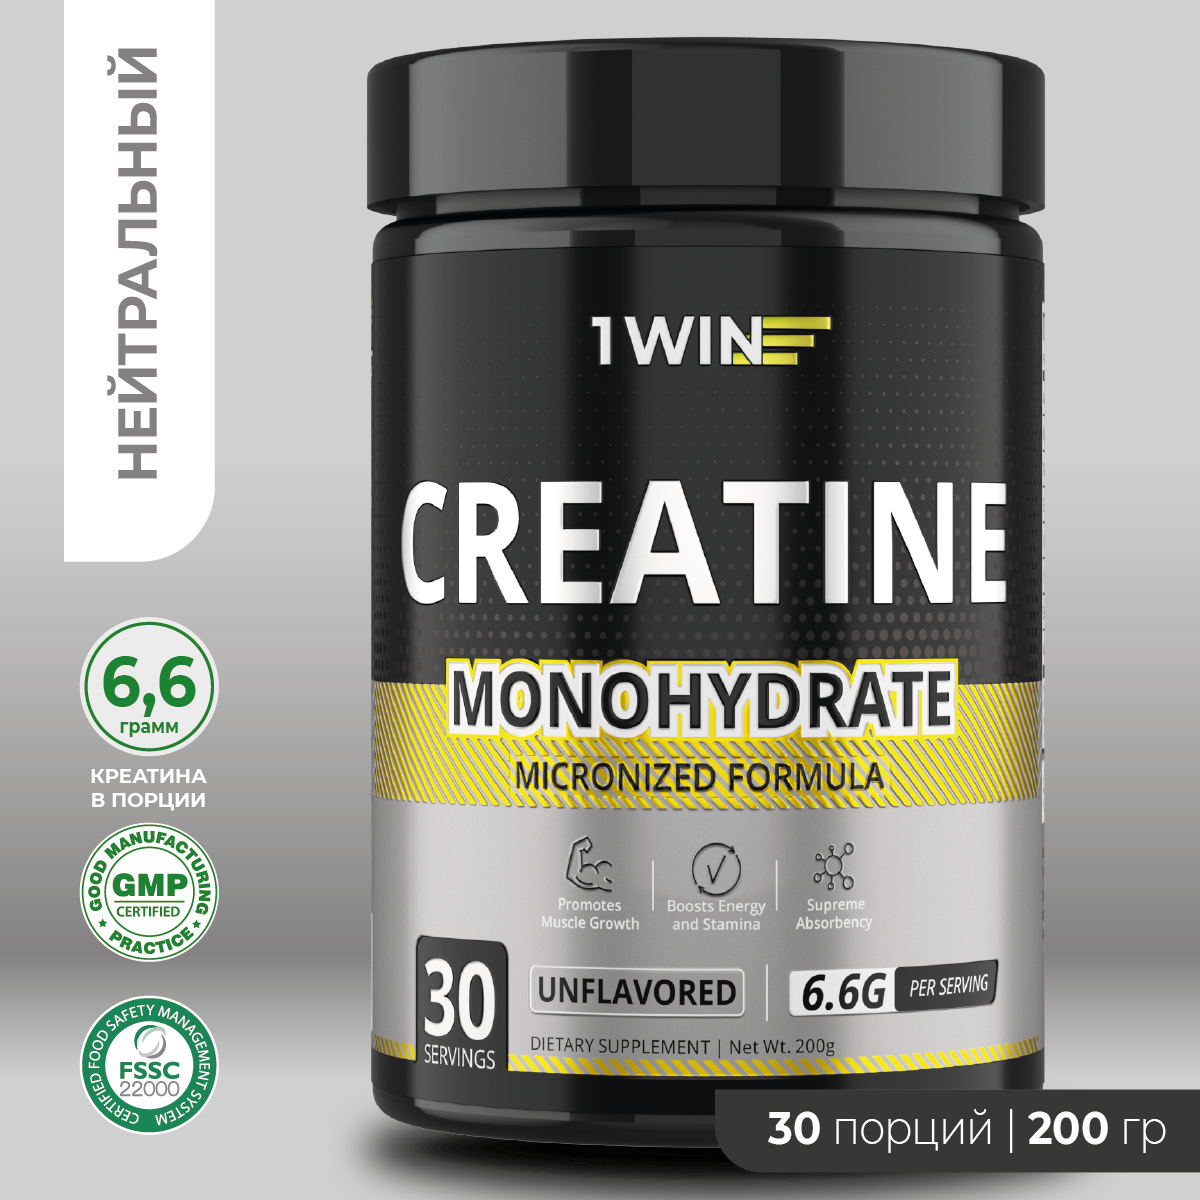 Креатин моногидрат 1WIN Creatine Monohydrate, без добавок, 30 порций